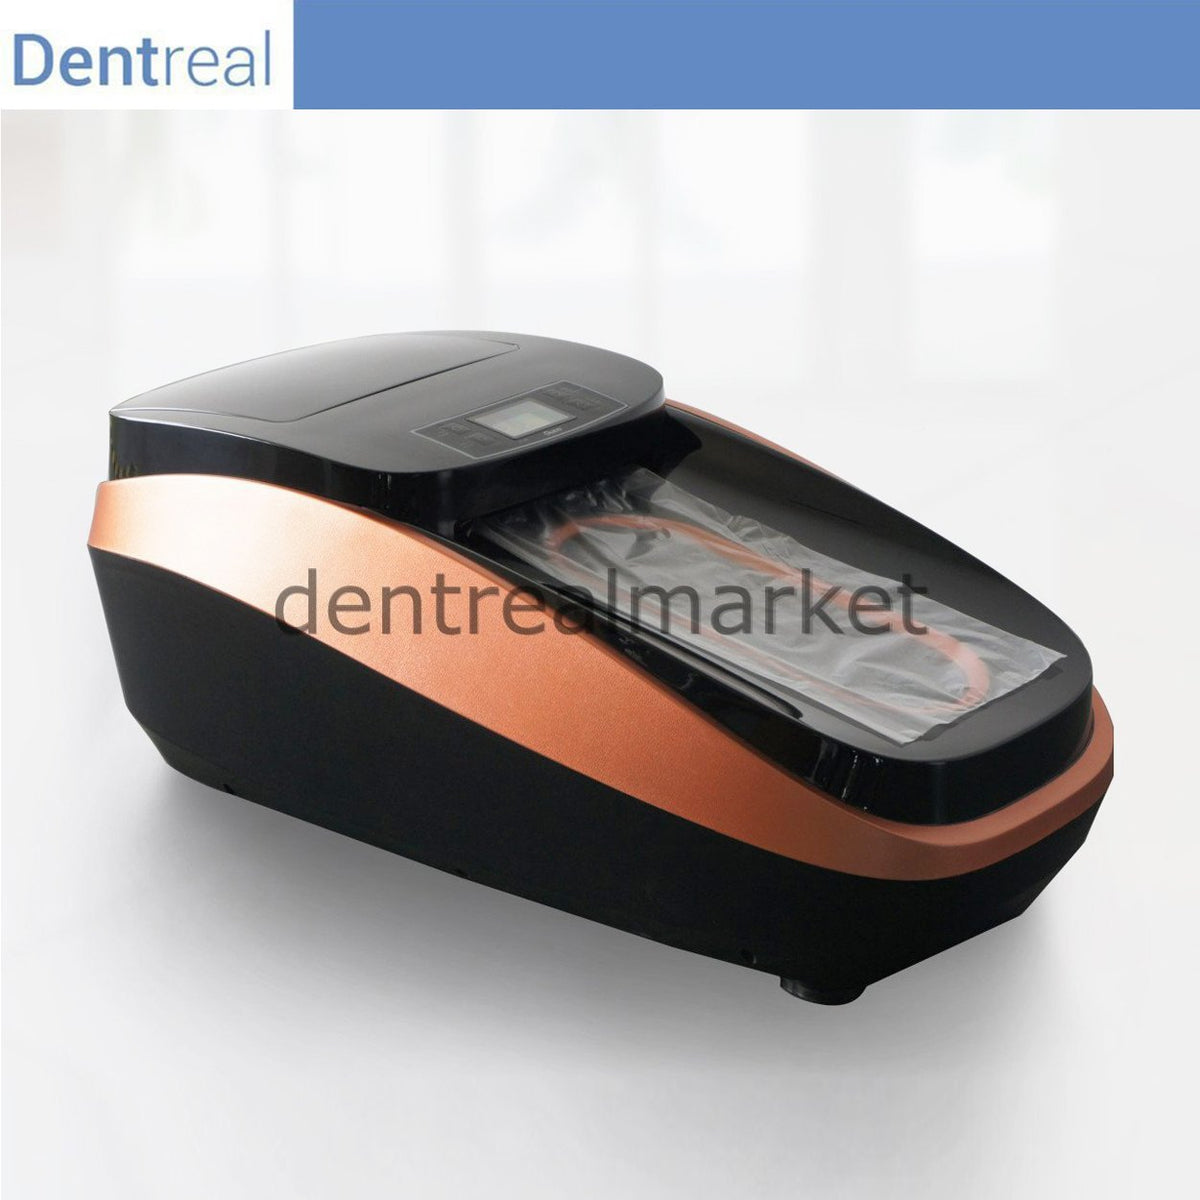 DentrealStore - Dentreal XT-46C Automatic Shoes Cover Machine - Copper